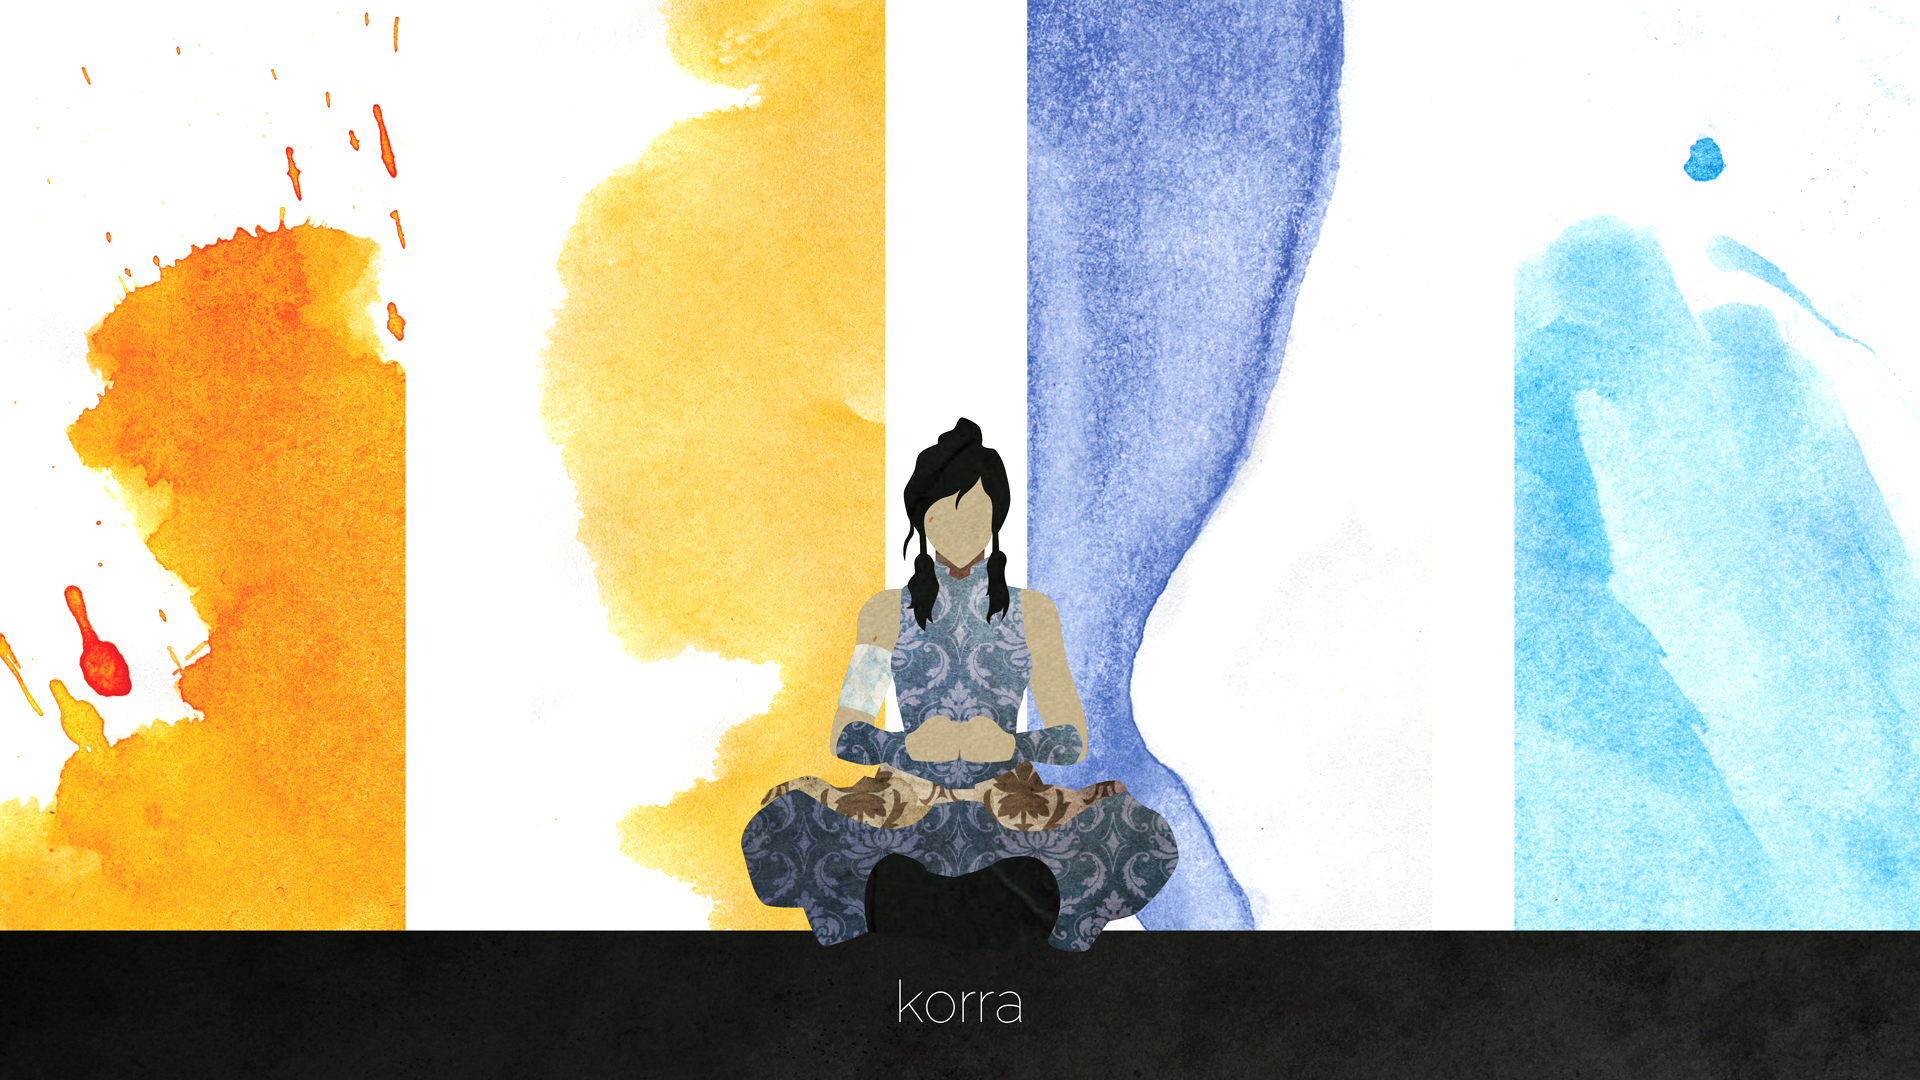 Avatar The Last Airbender The Legend Of Korra Korra 1920x1080